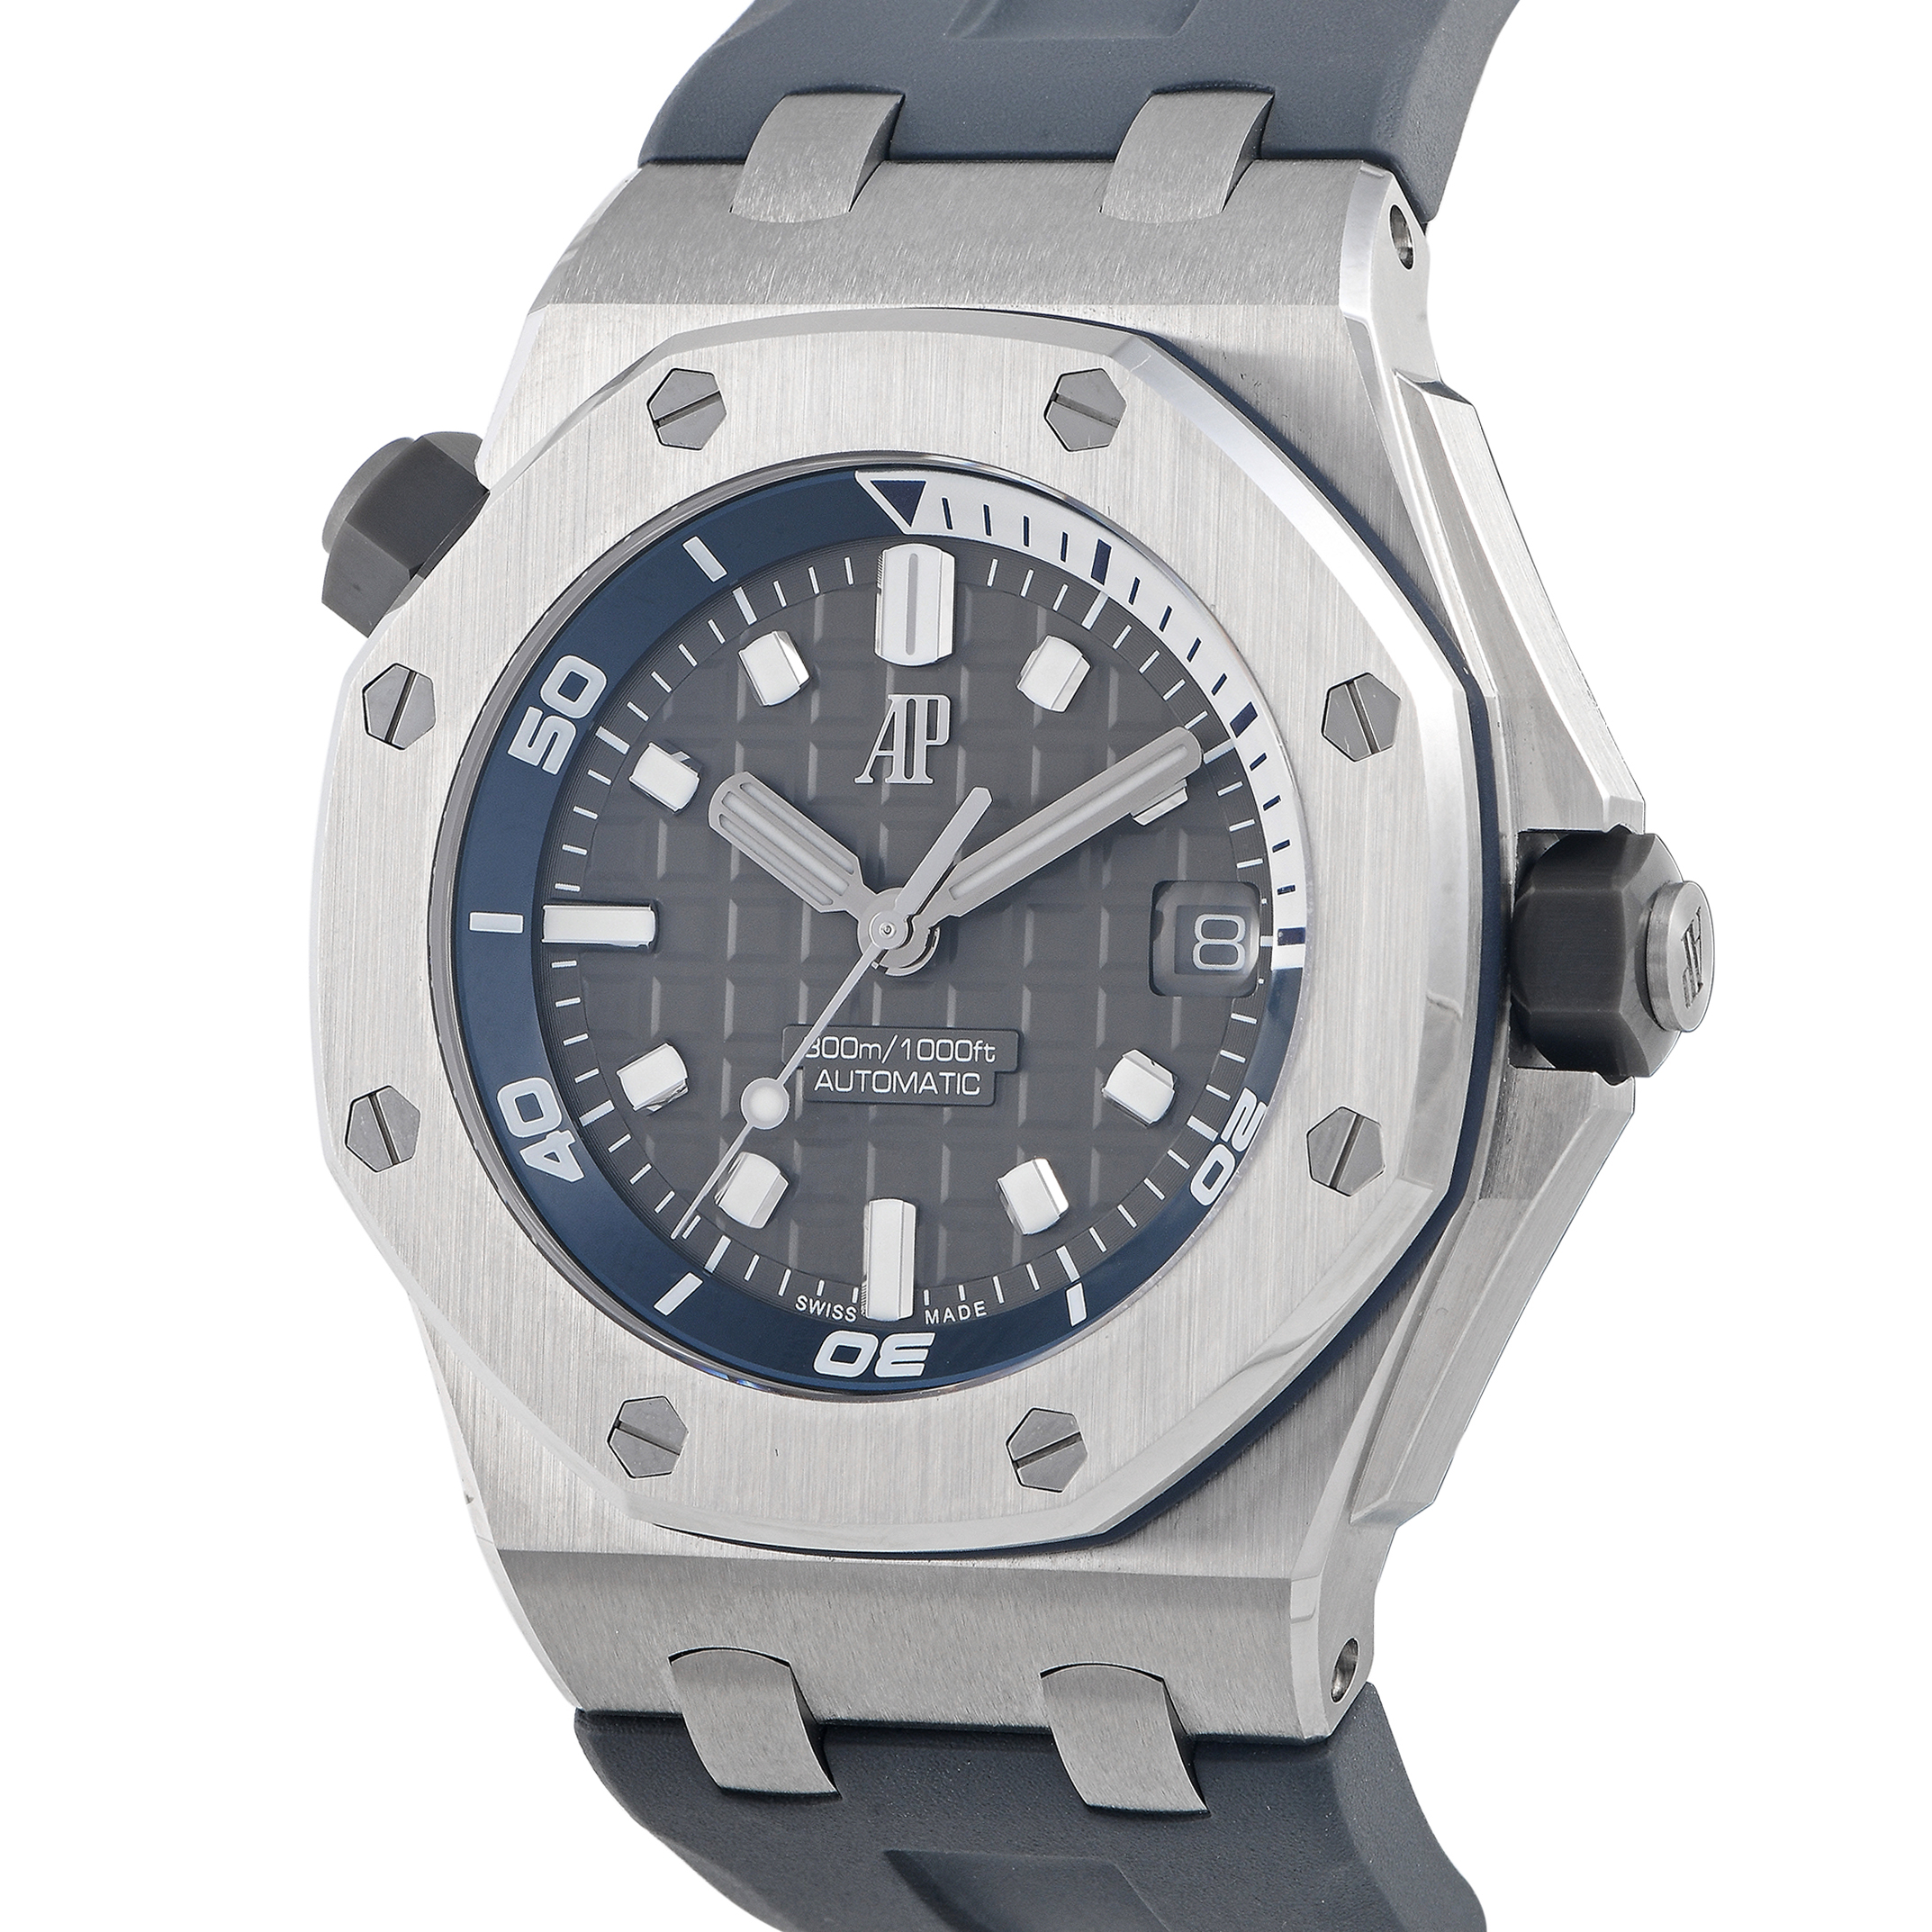 Audemars Piguet Royal Oak Offshore Diver Dial Watch 15720ST.OO.A009CA.01